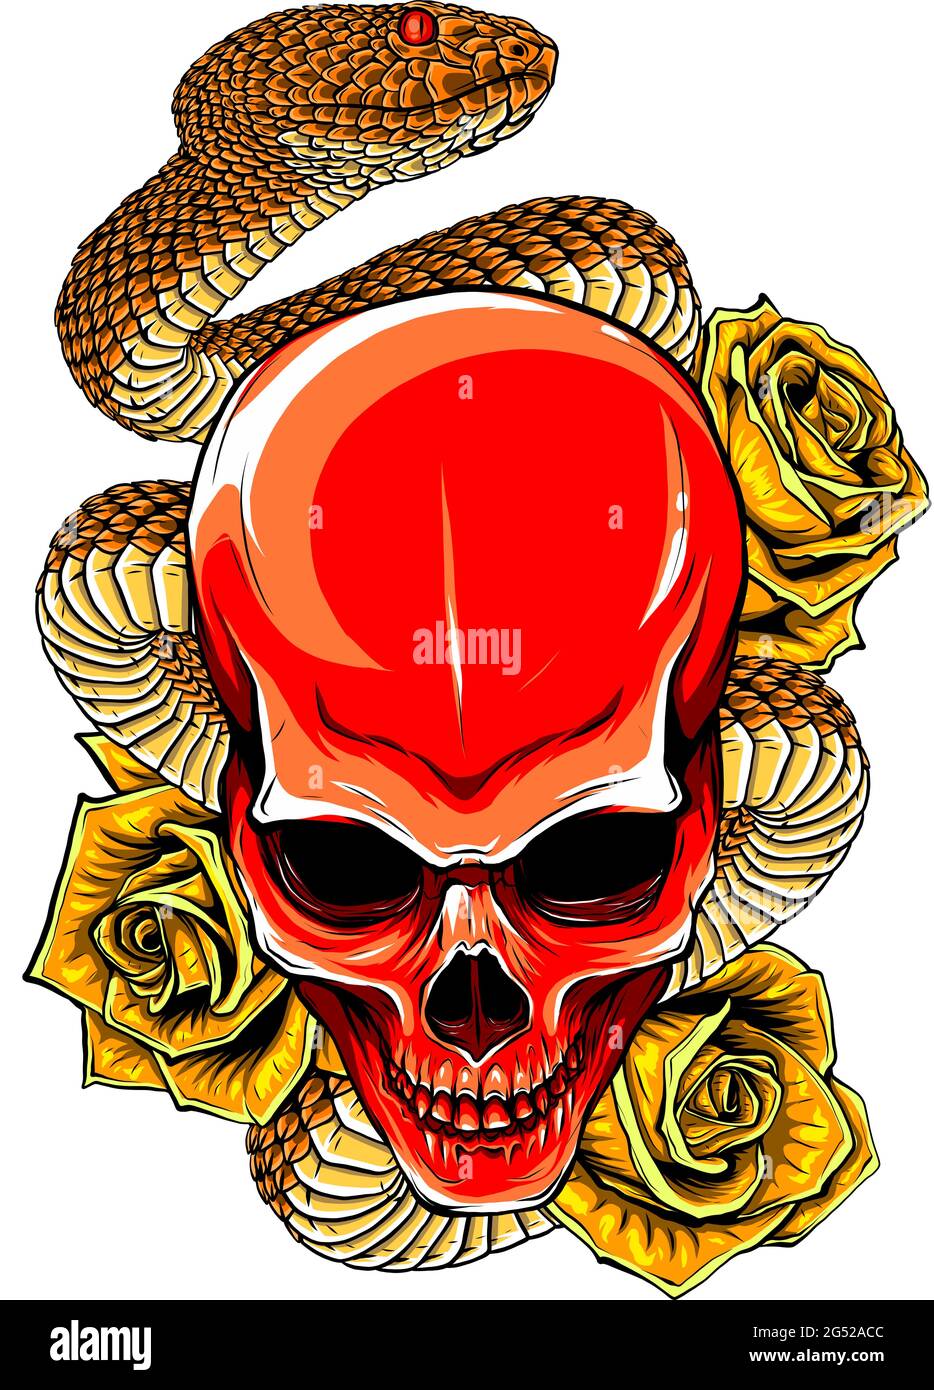 vector illustration of skull, roses and snake Stock Vector